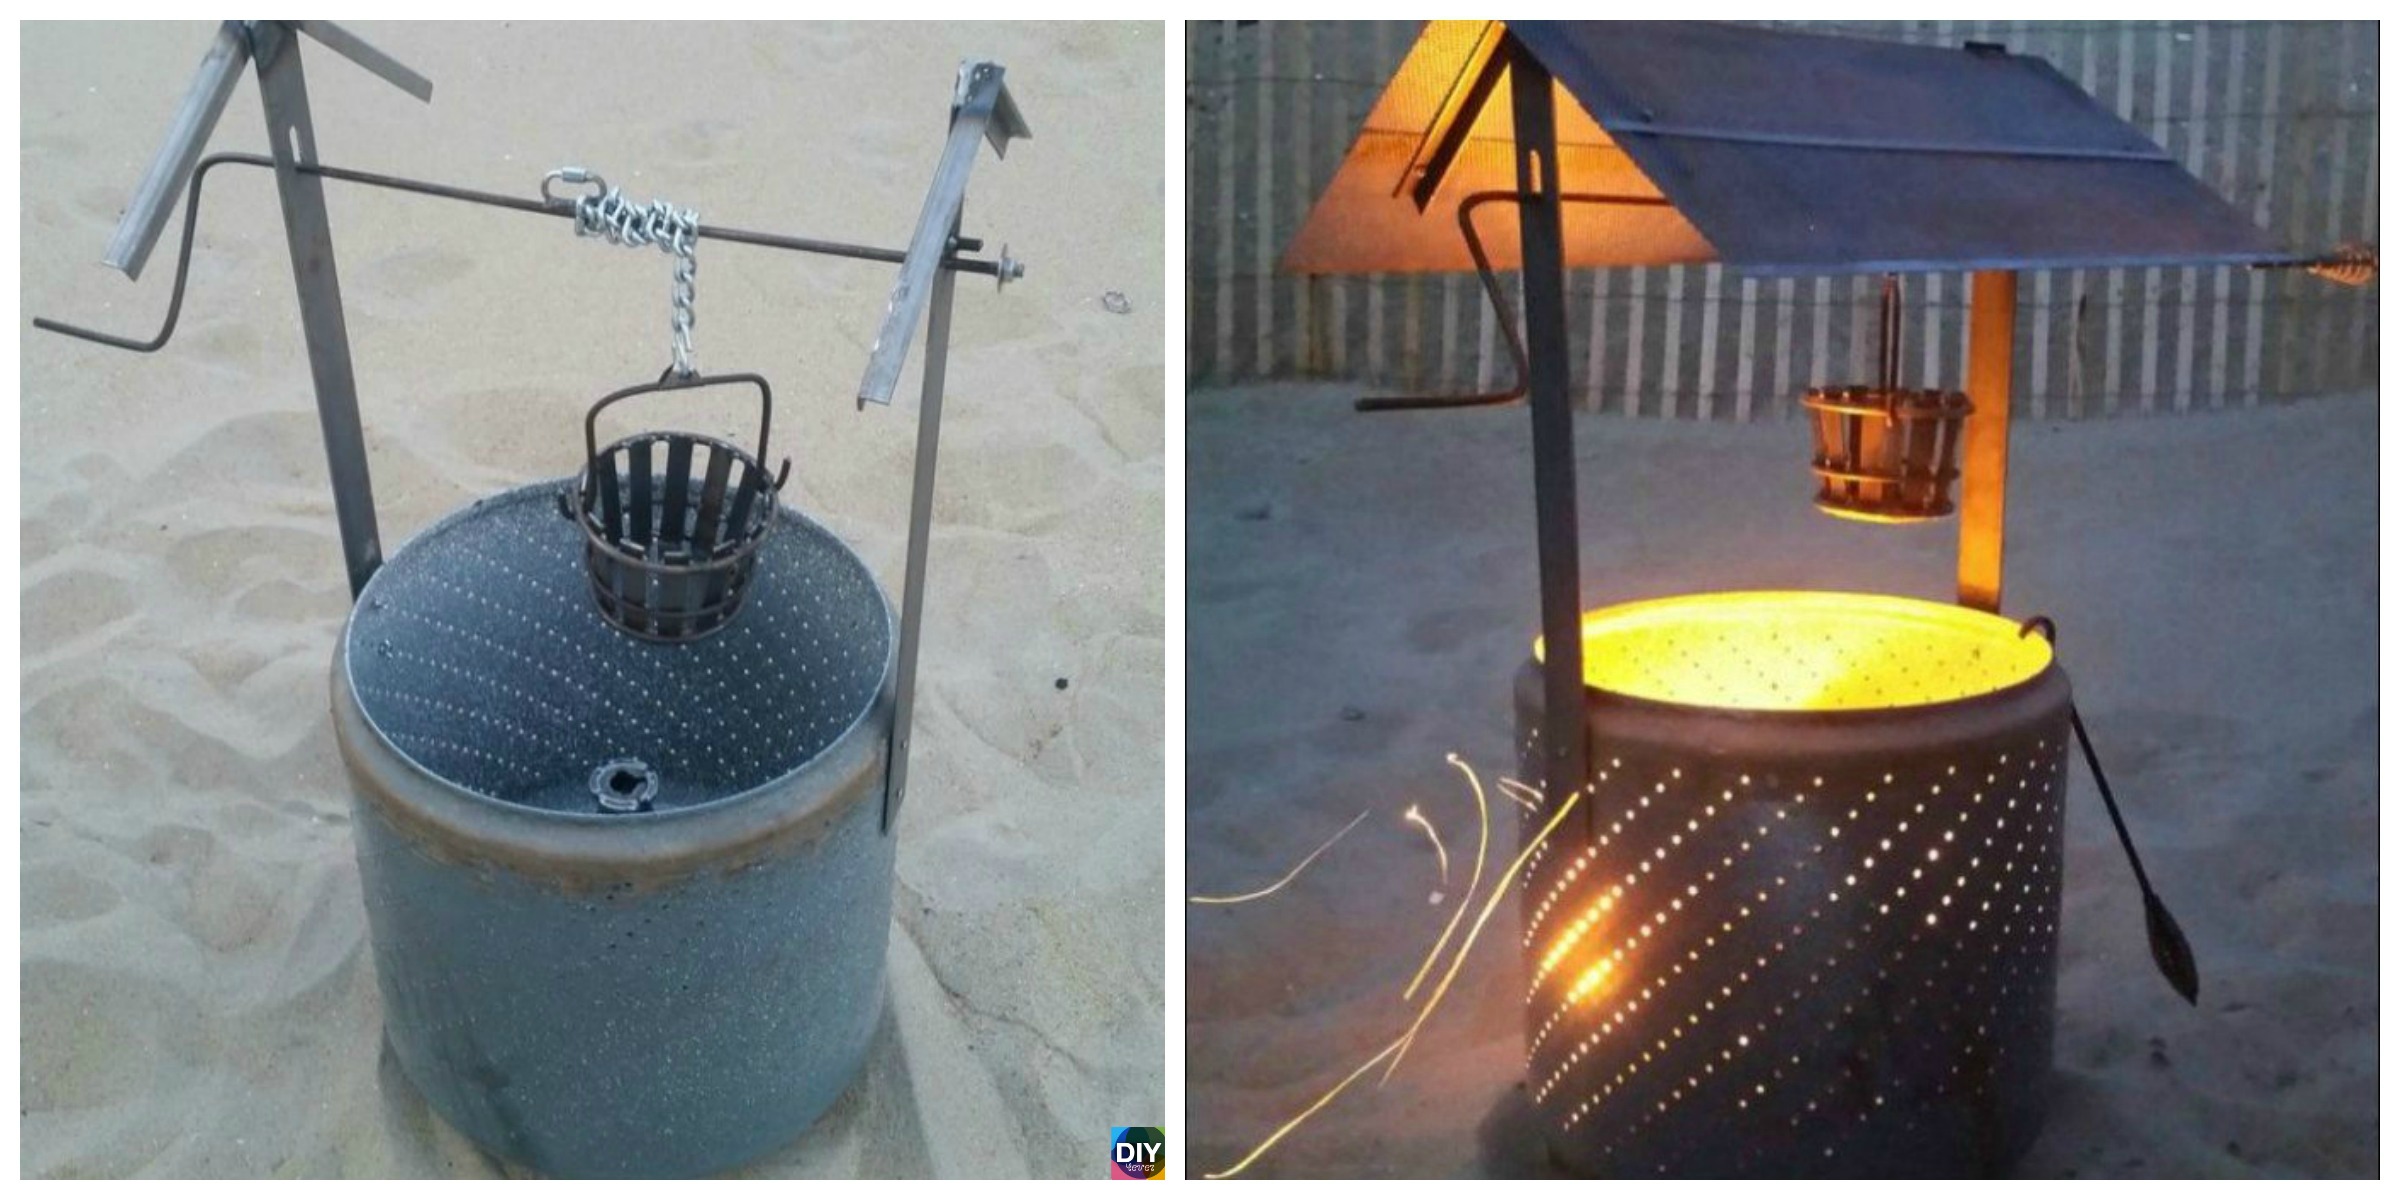 DIY Wishing Well Burn Barrel from Old Drum